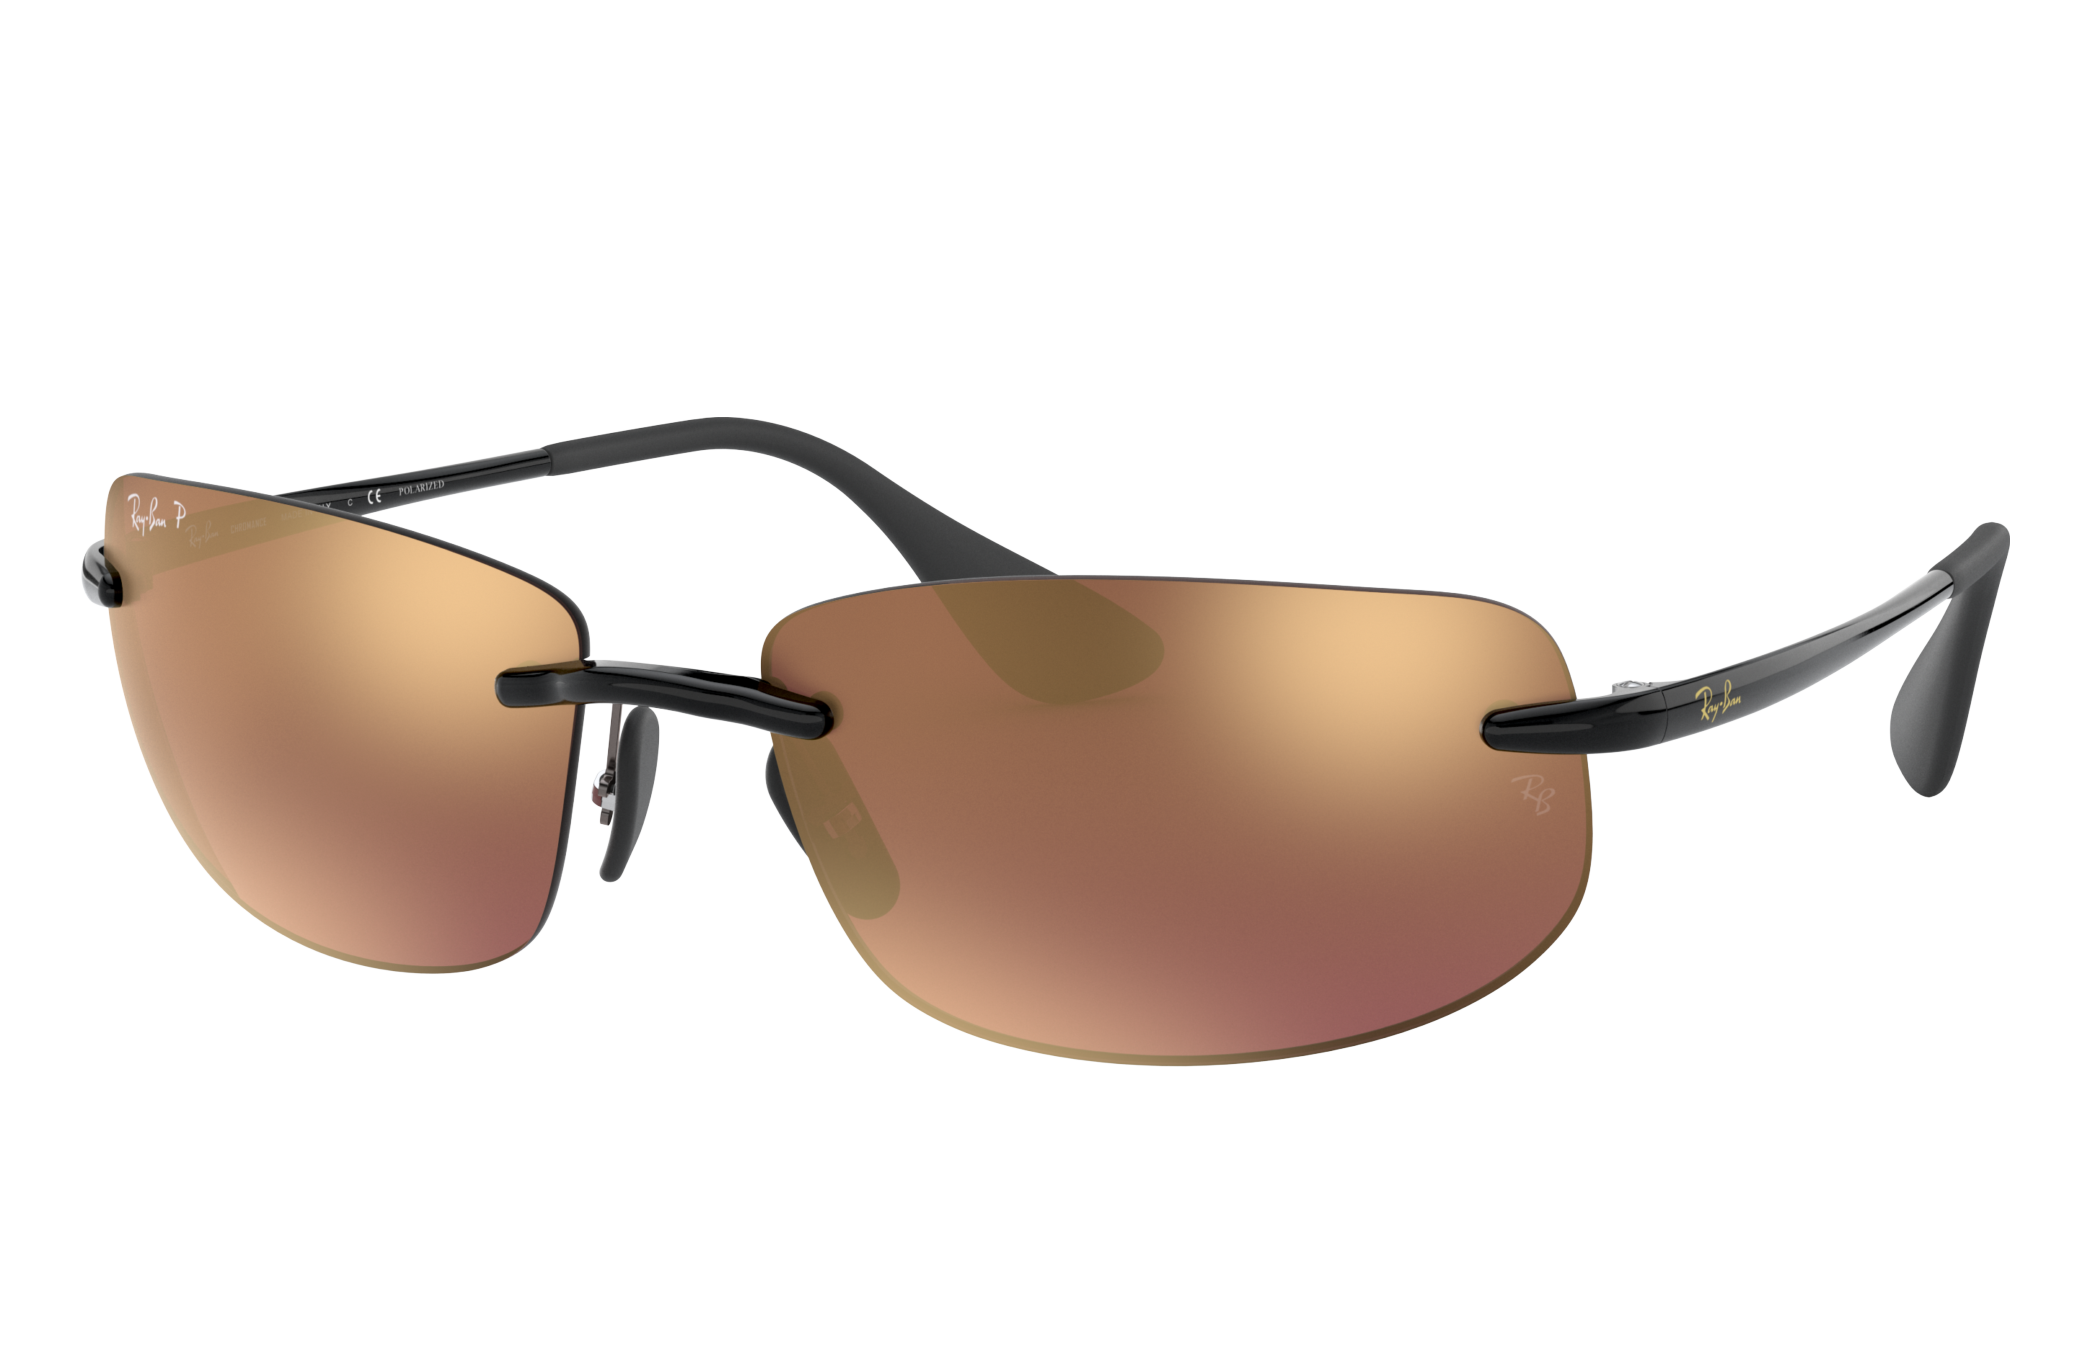 rb4254-chromance-sunglasses-in-black-and-purple-chromance-ray-ban